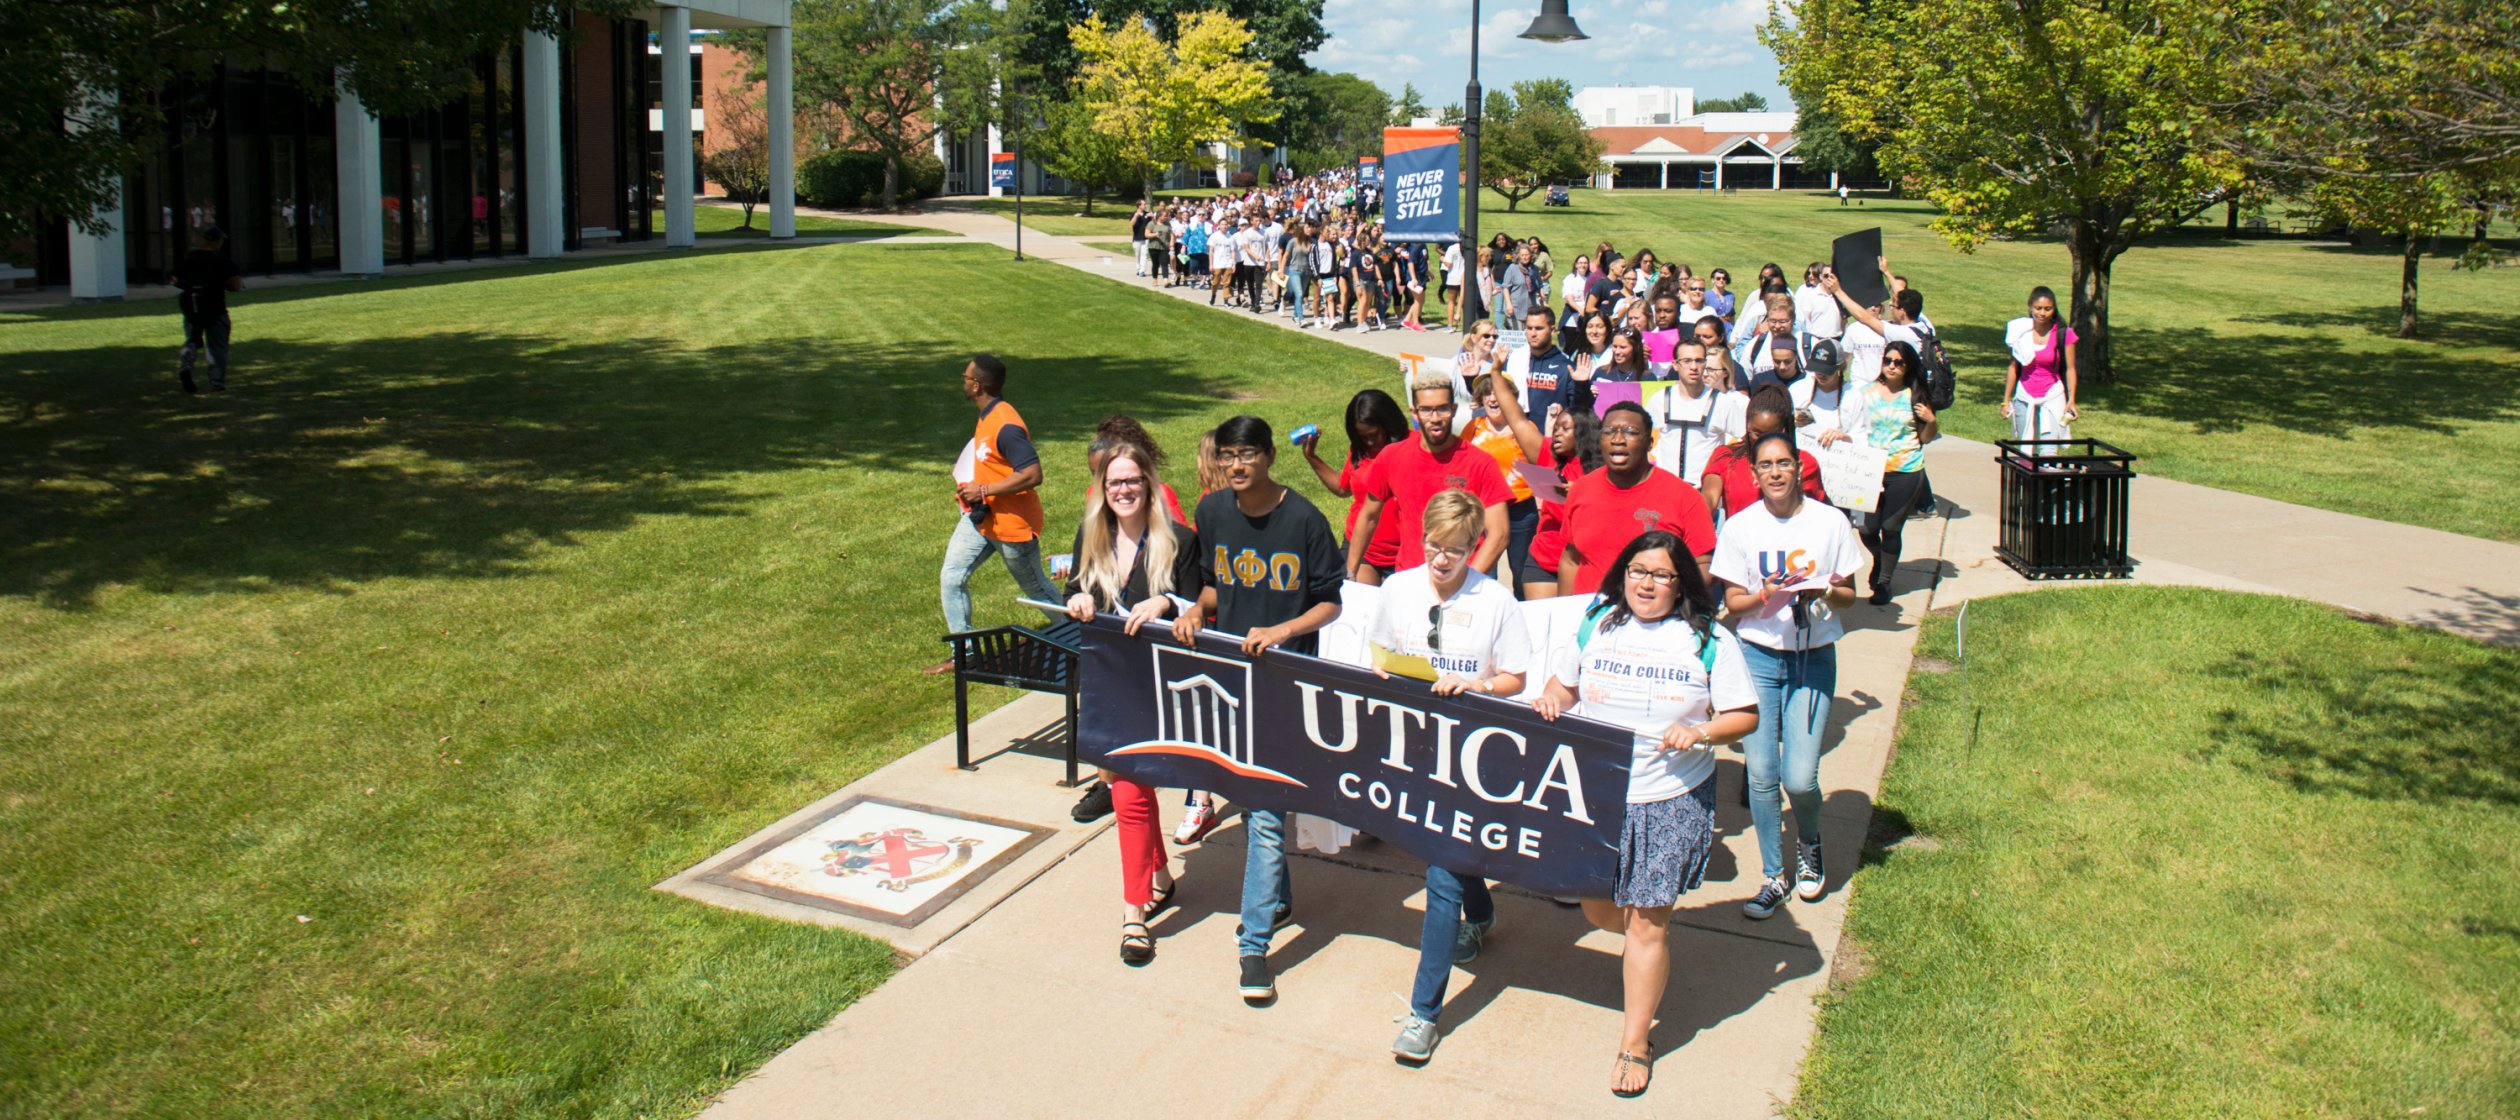 Ways to Support UC Utica College